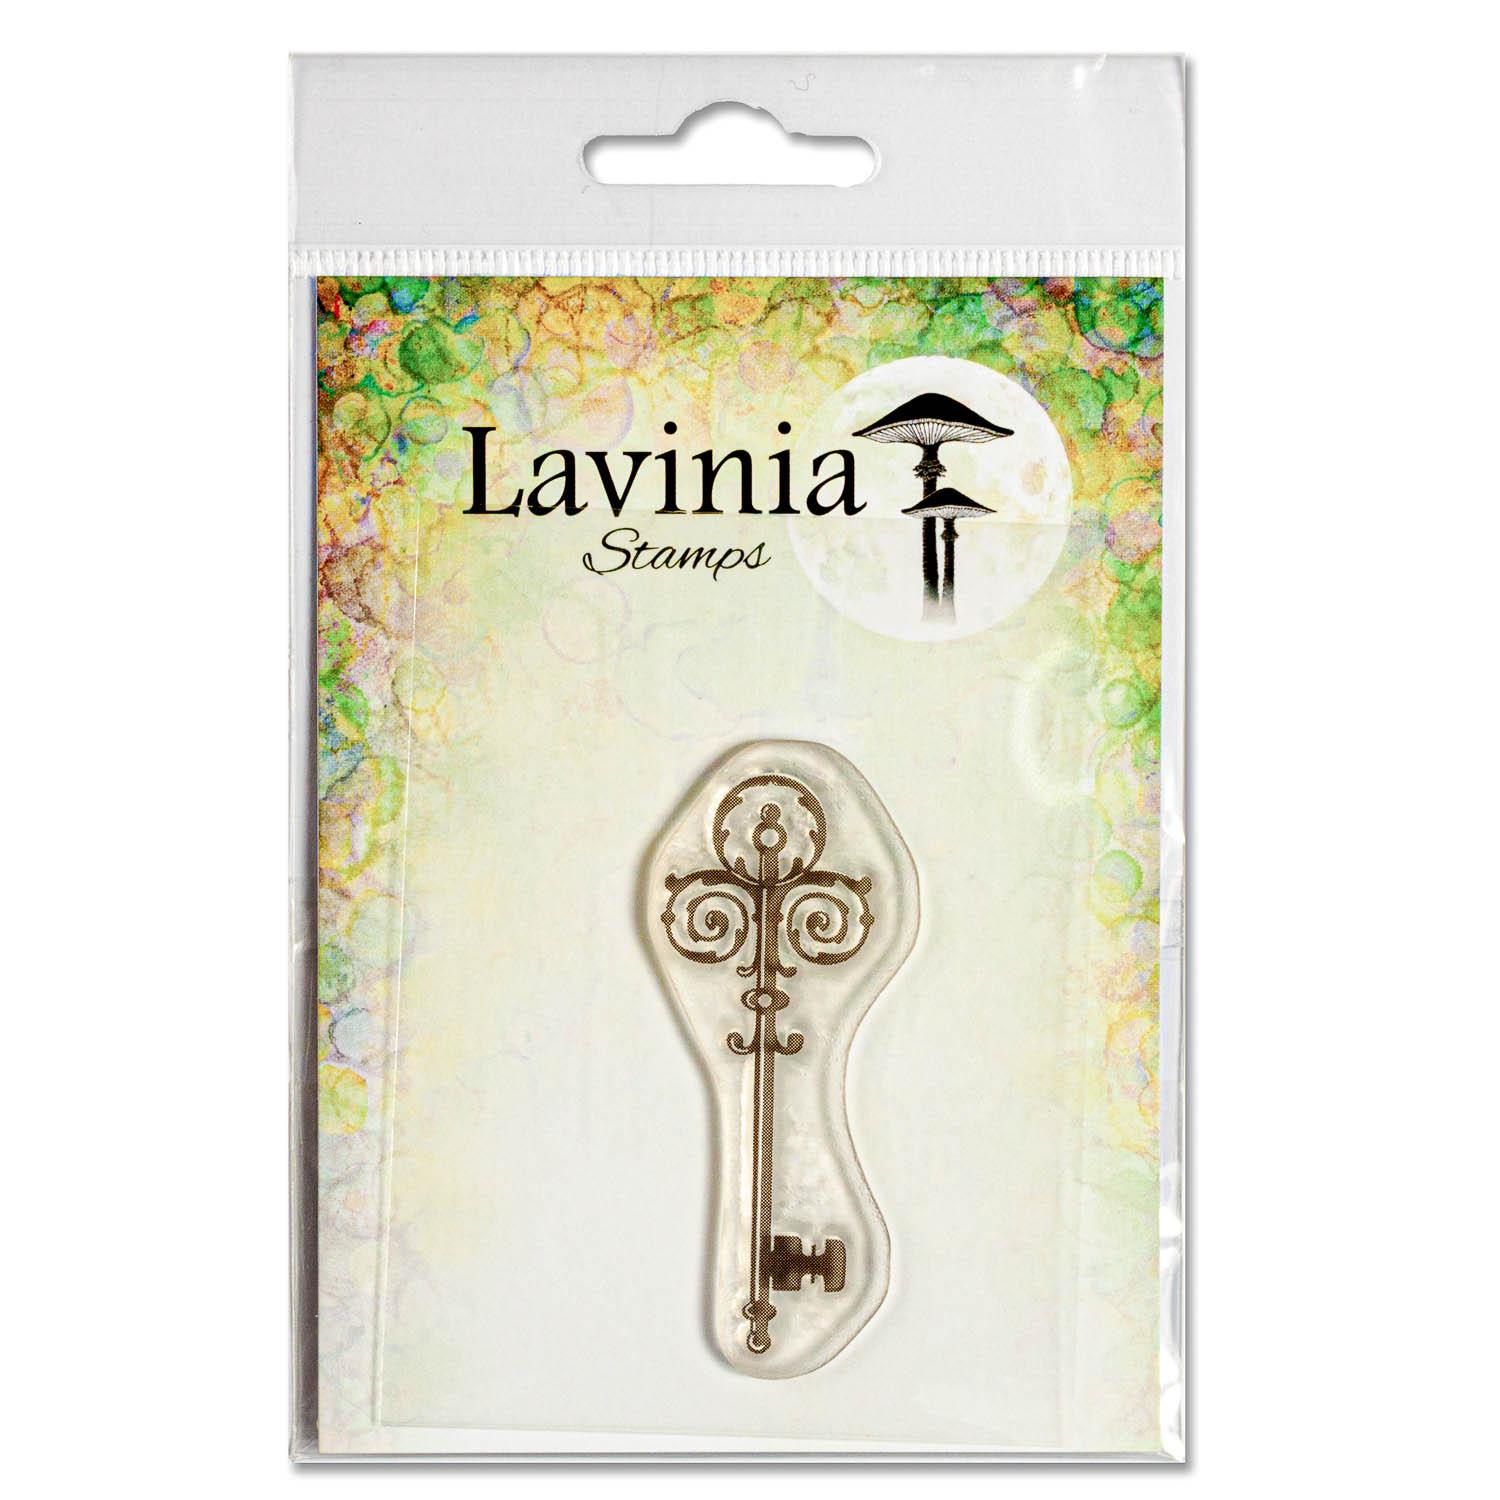 Lavinia - Key Small - Lav806